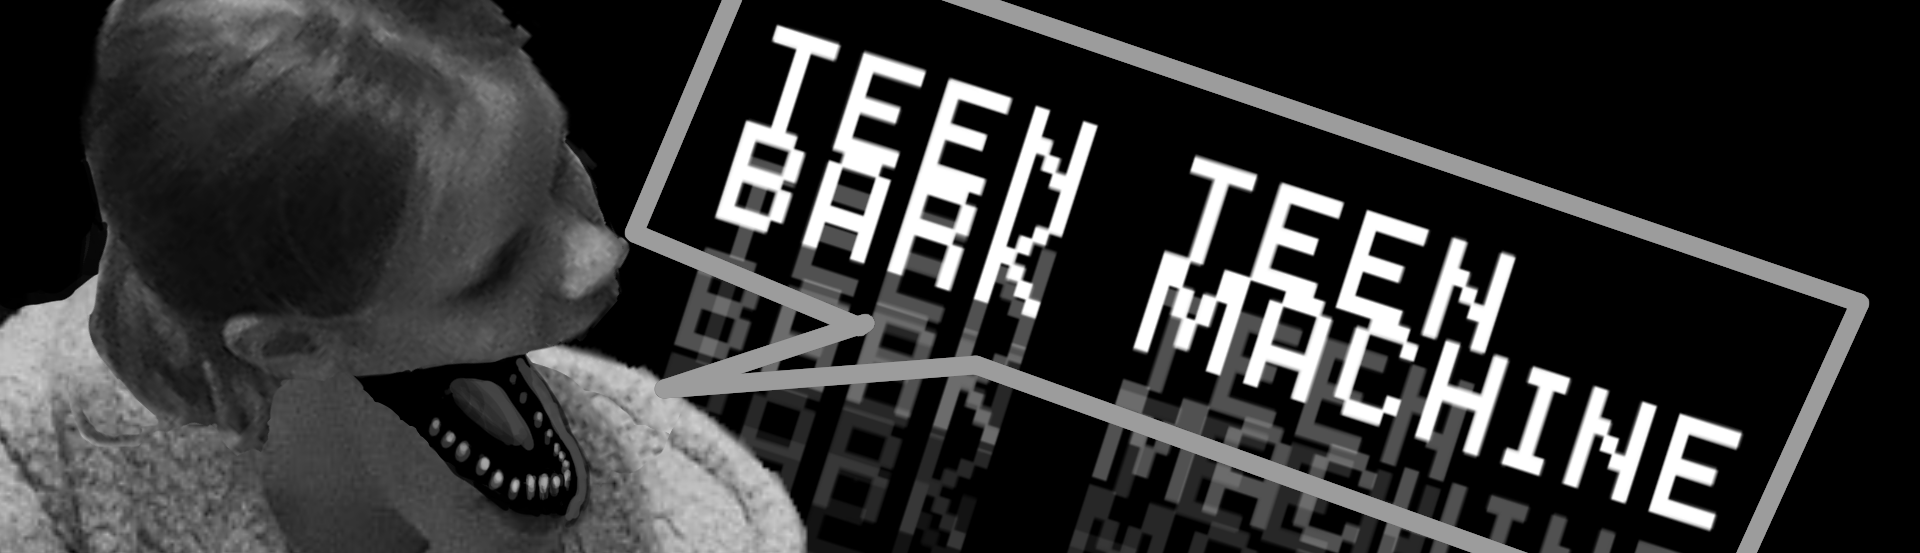 TEEN TEEN BARK MACHINE